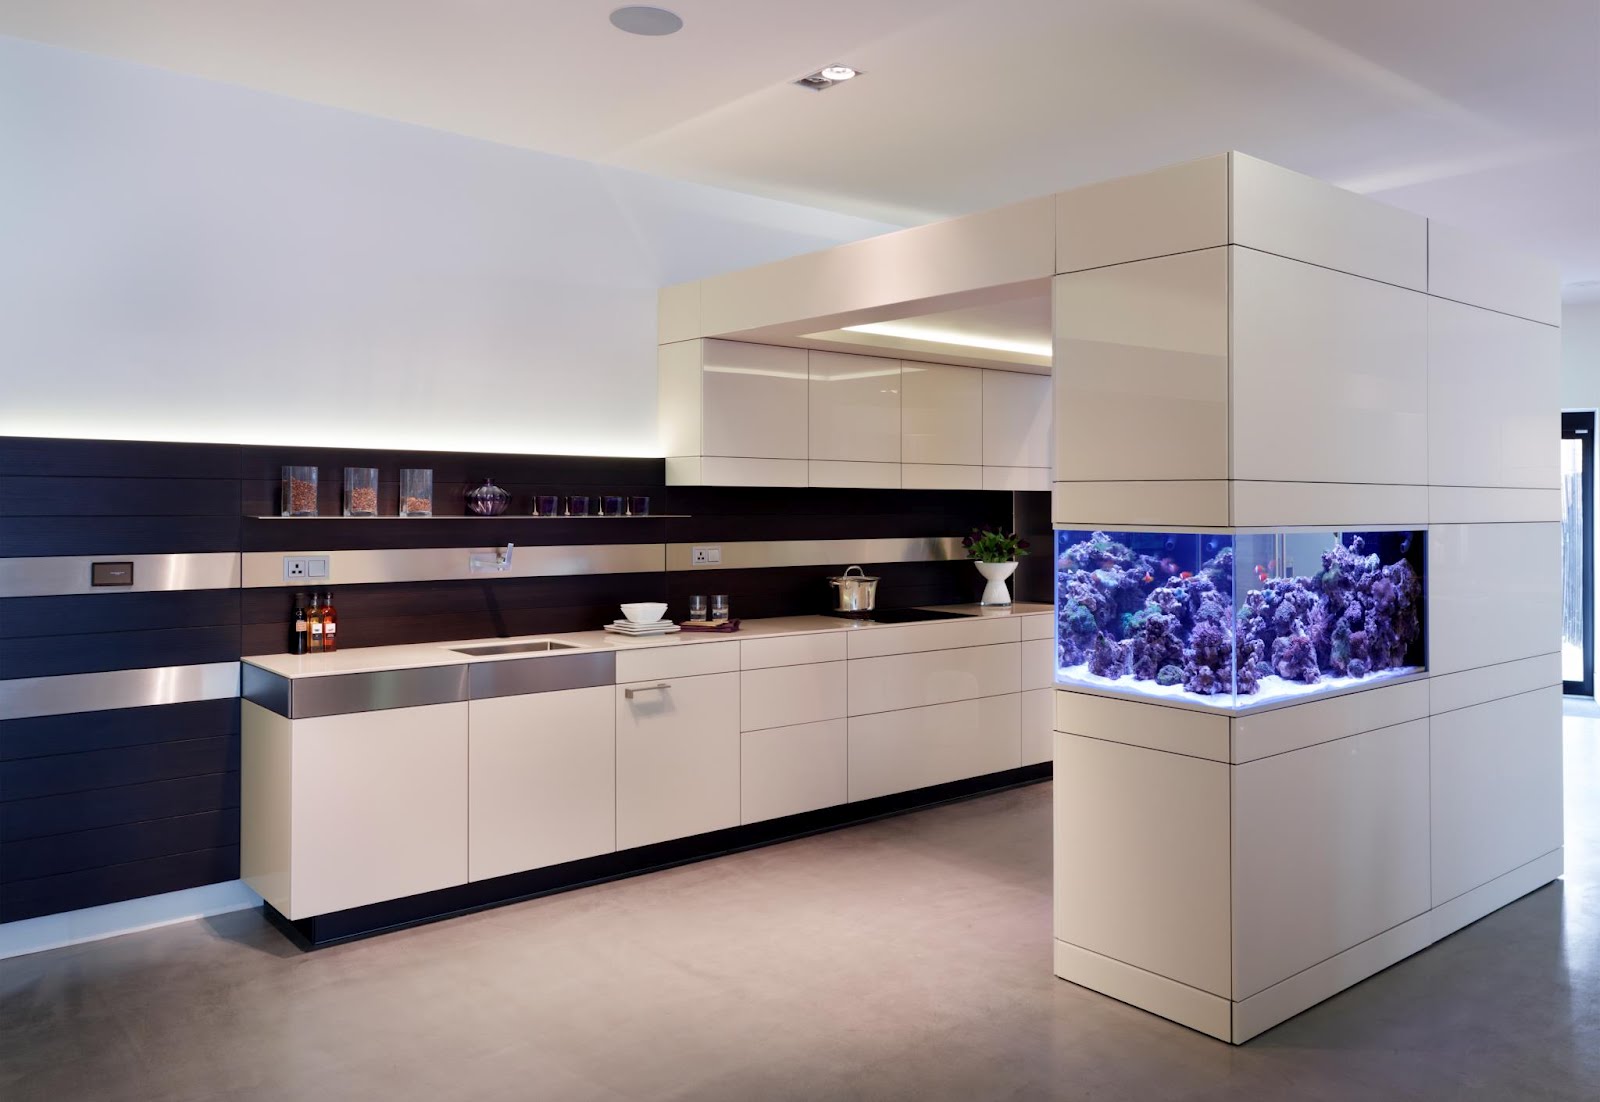 Living-room built-in wall glass fish Aquarium